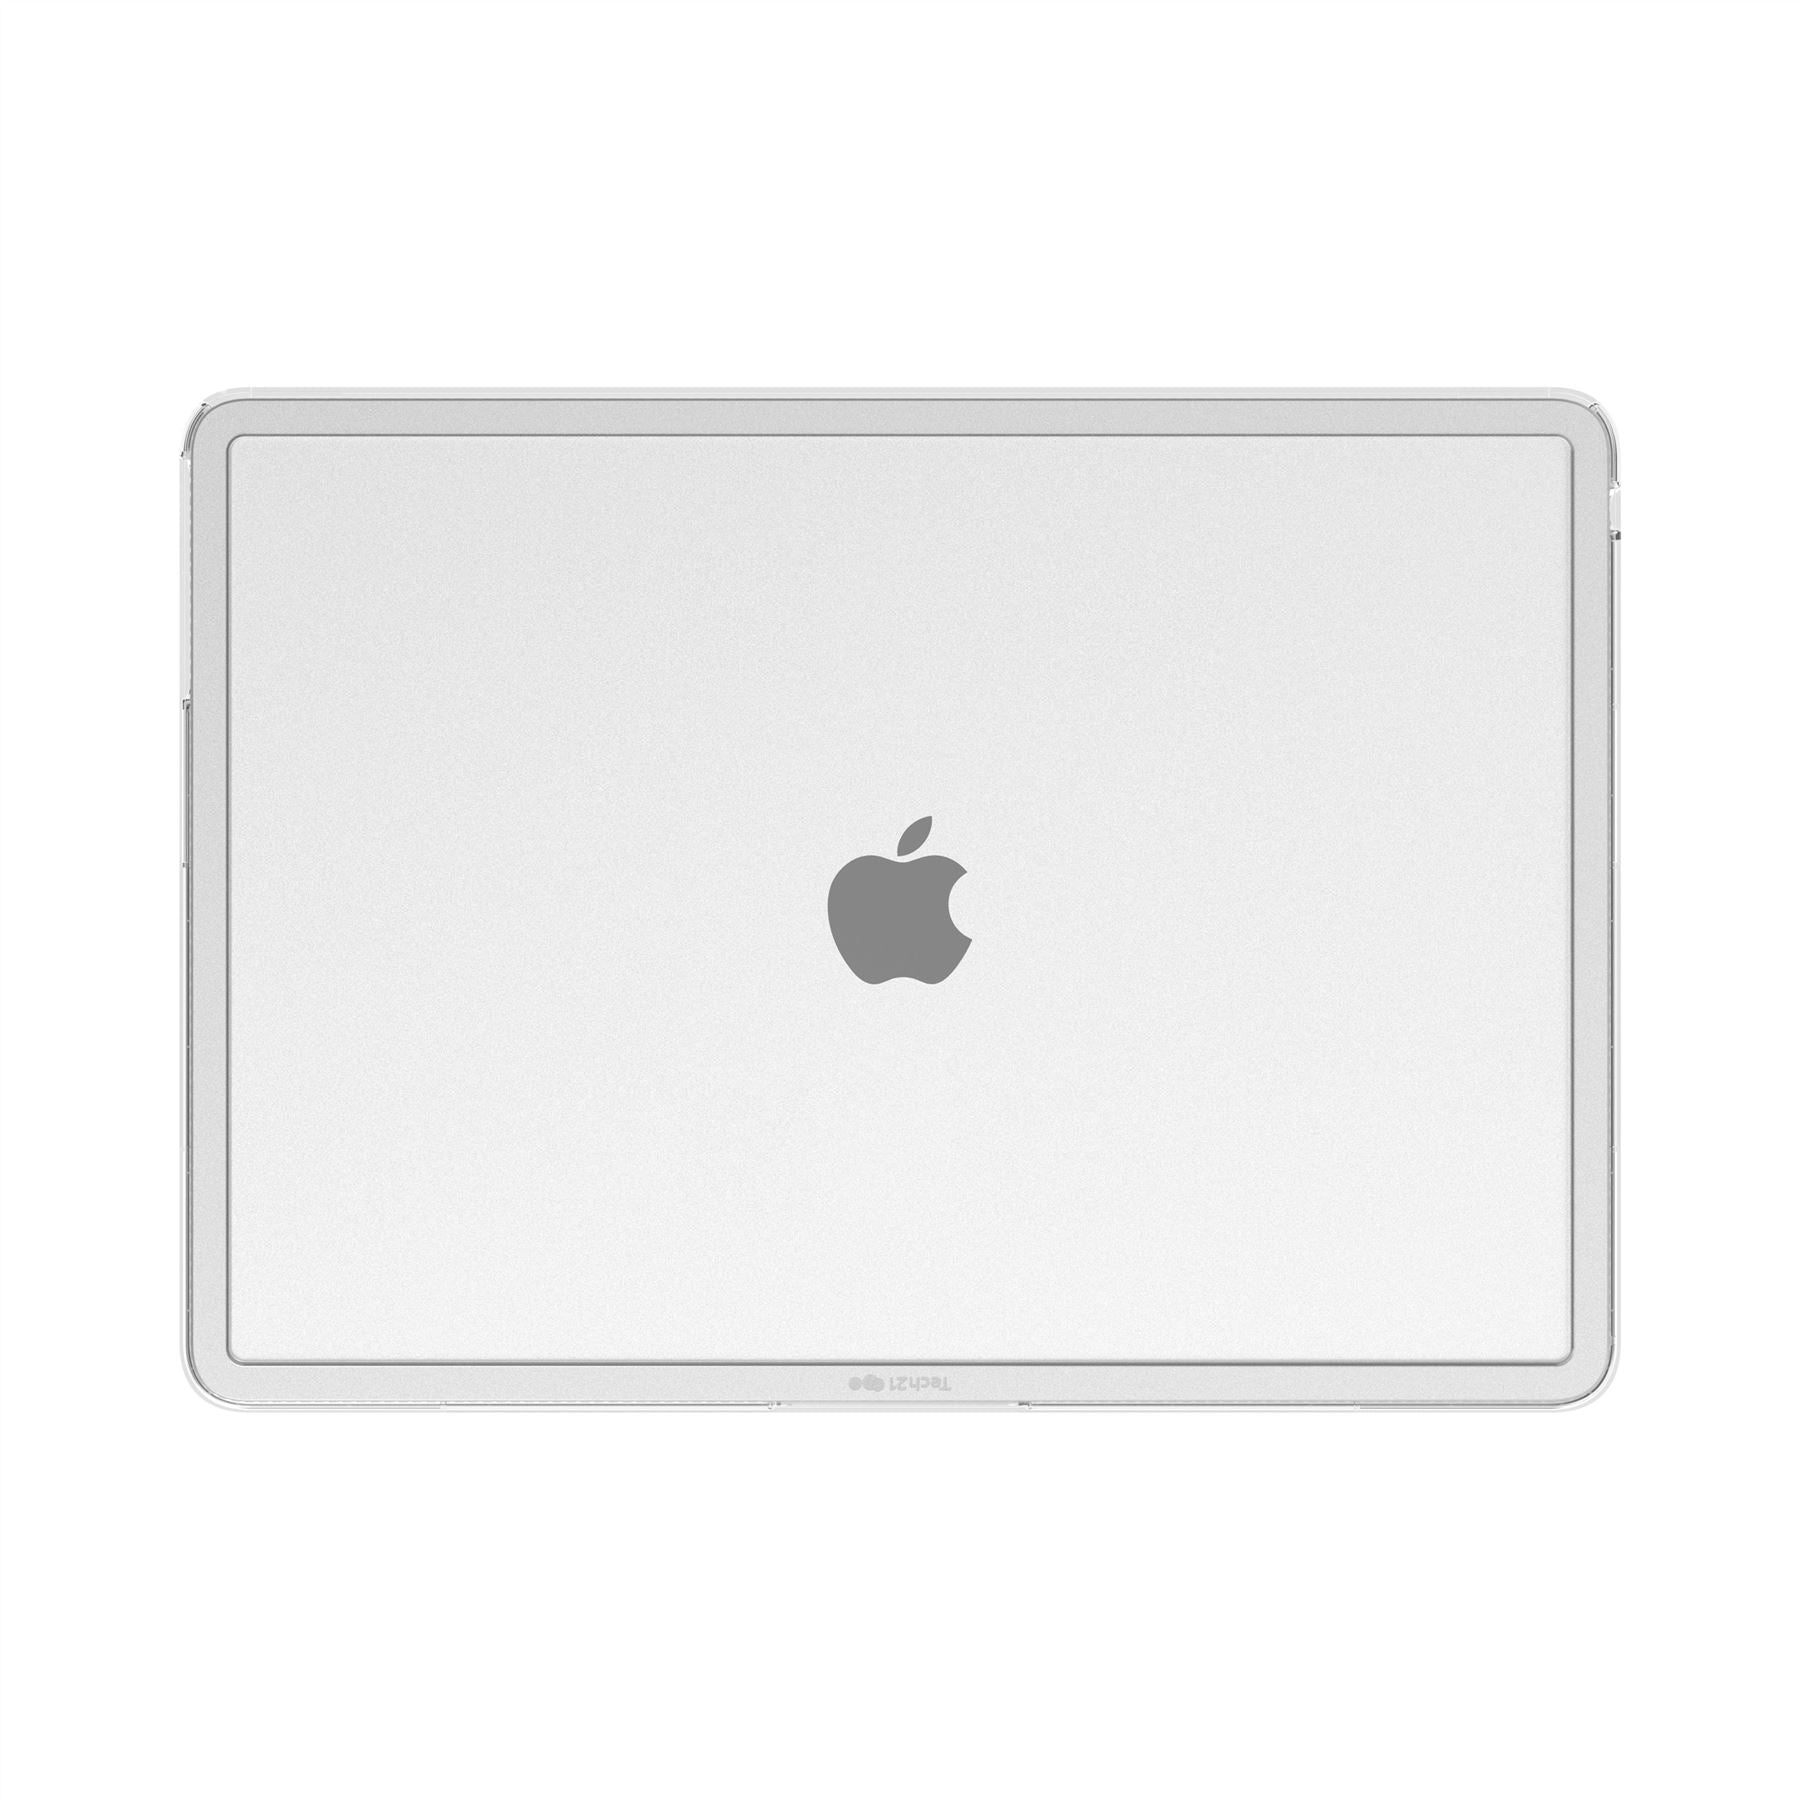 Evo Hardshell - Apple MacBook Air 13